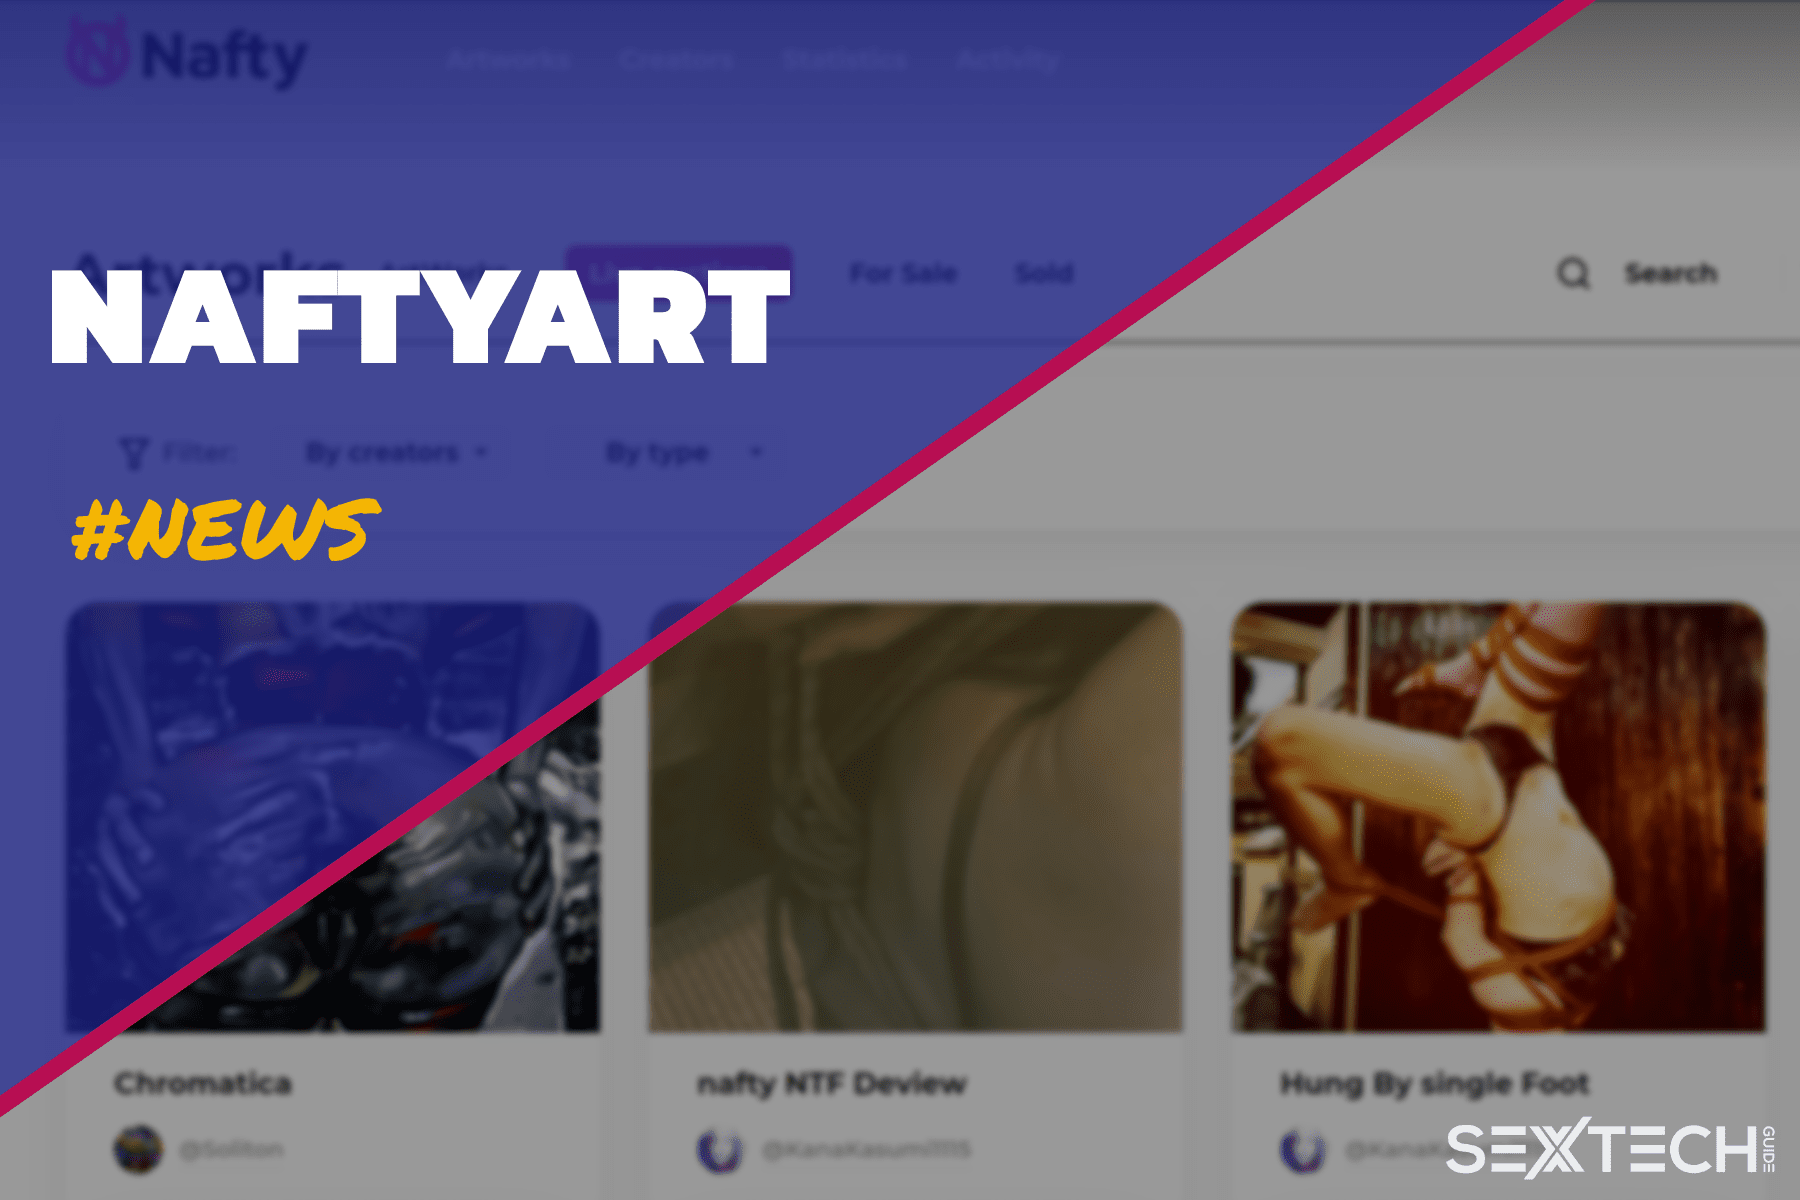 NaftyArt NFT platform